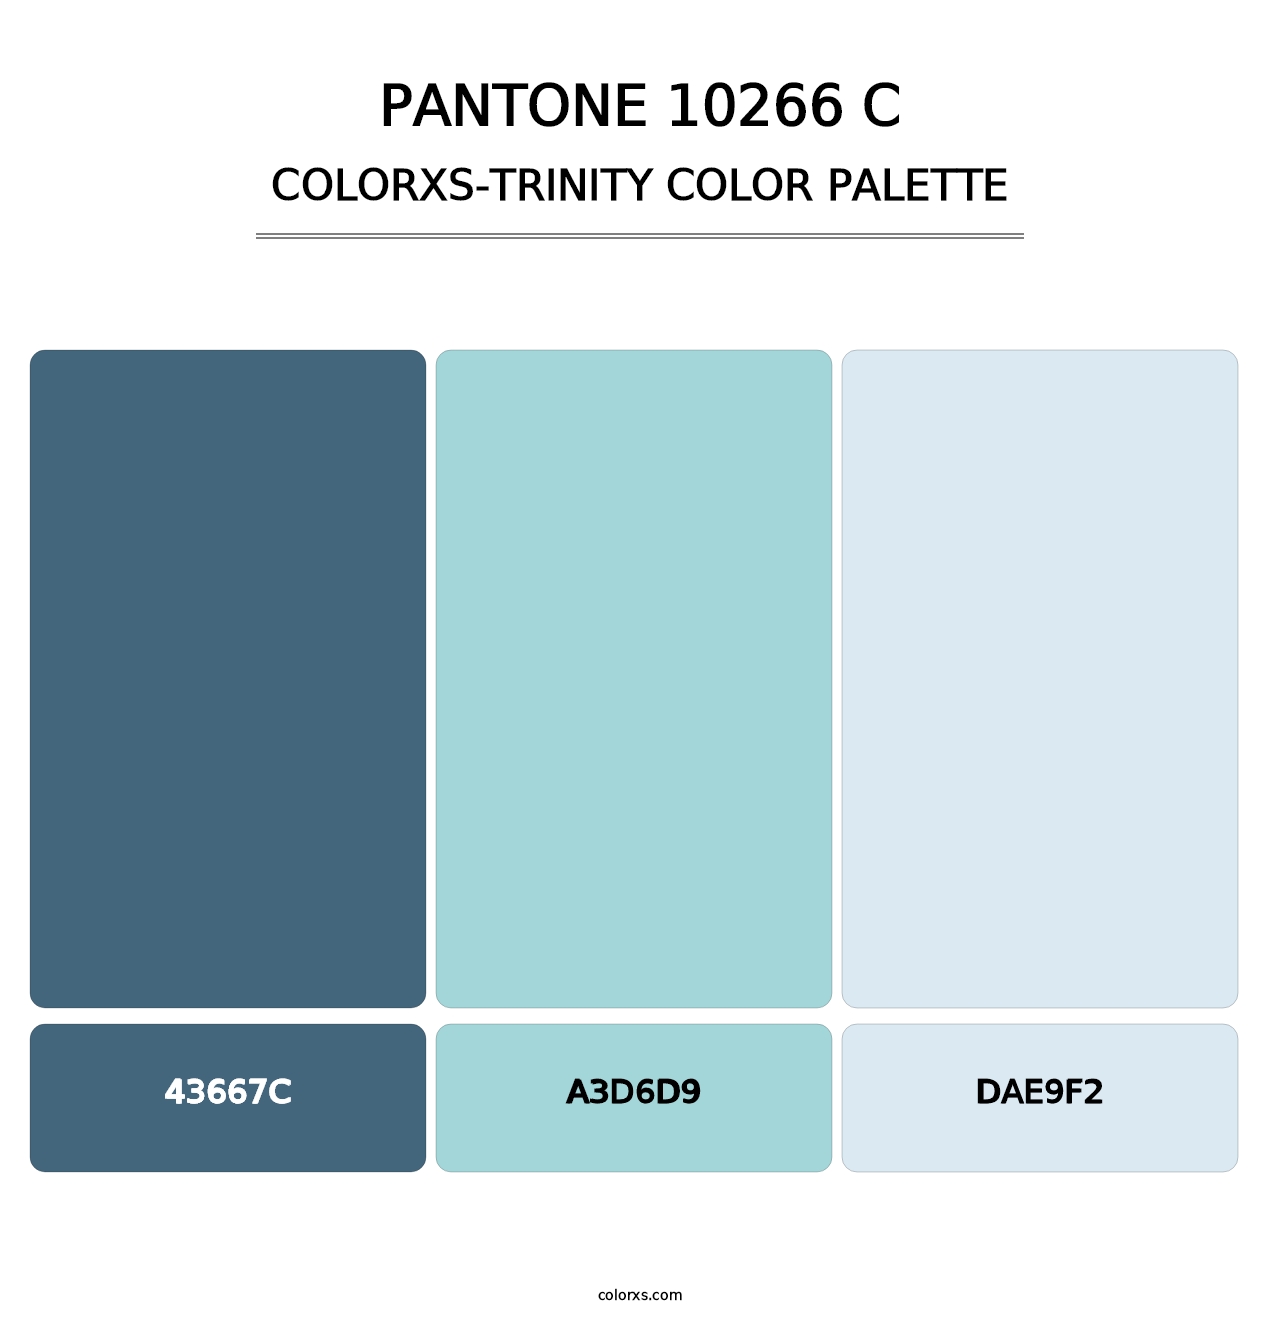 PANTONE 10266 C - Colorxs Trinity Palette